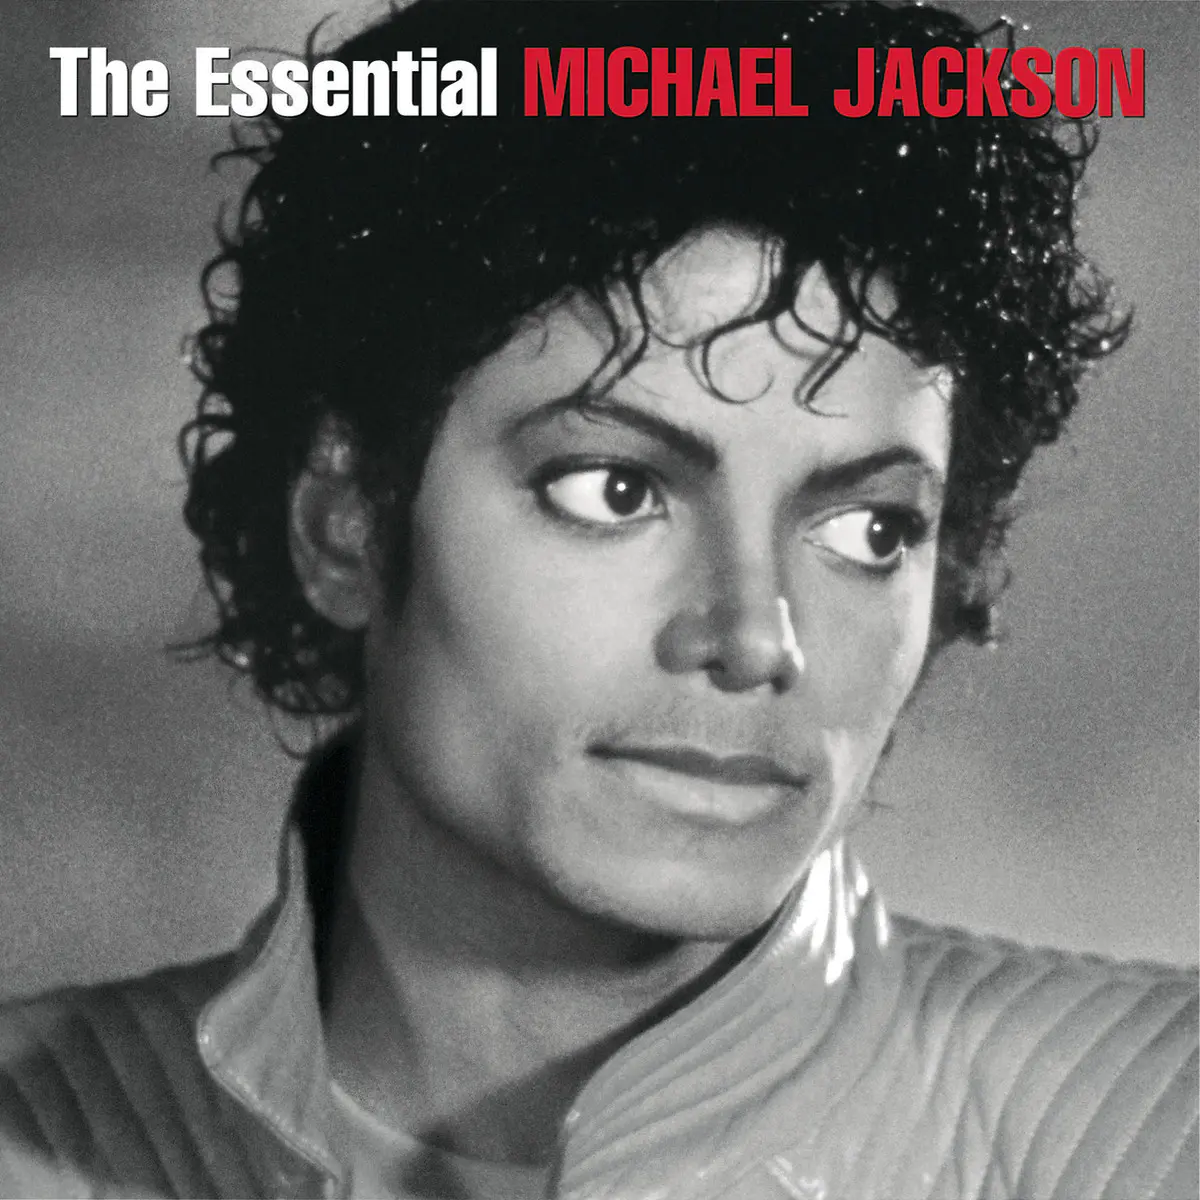 Dangerous Lyrics In English The Essential Michael Jackson Dangerous Song Lyrics In English Free Online On Gaana Com